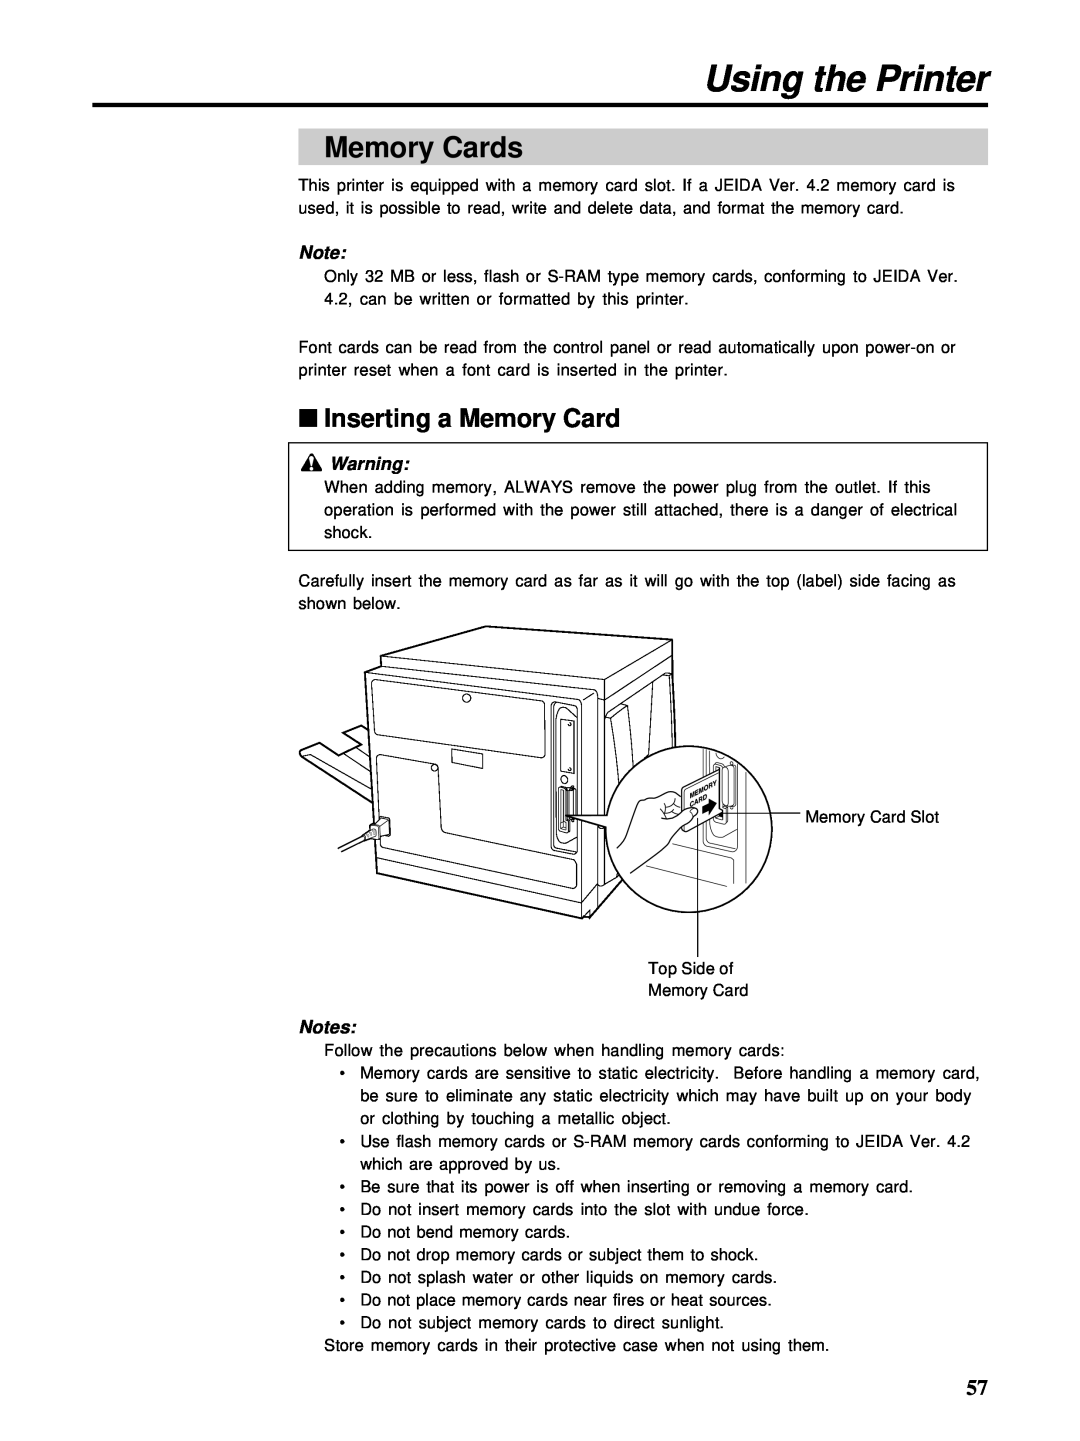 HP Ci 1100 manual Memory Cards, Inserting a Memory Card, Using the Printer 